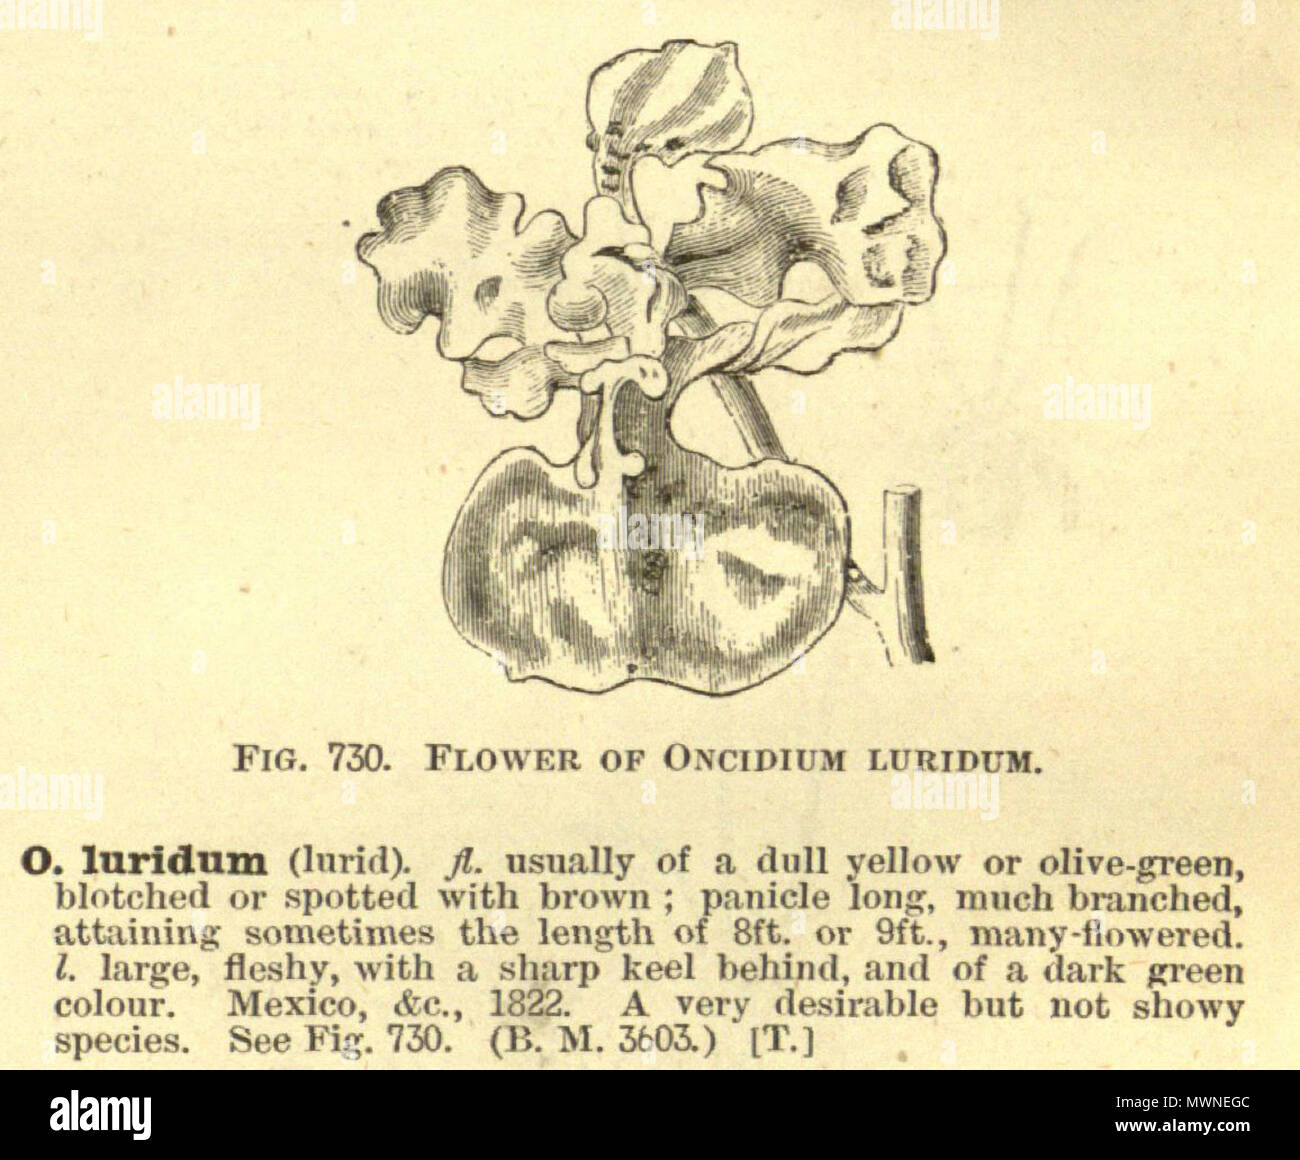 . Illustration of: Oncidium luridum . between 1884 and 1888. Edited by George Nicholson 456 Oncidium luridum - cutout from Enc.Hort.5-487 (1884-1888) Stock Photo